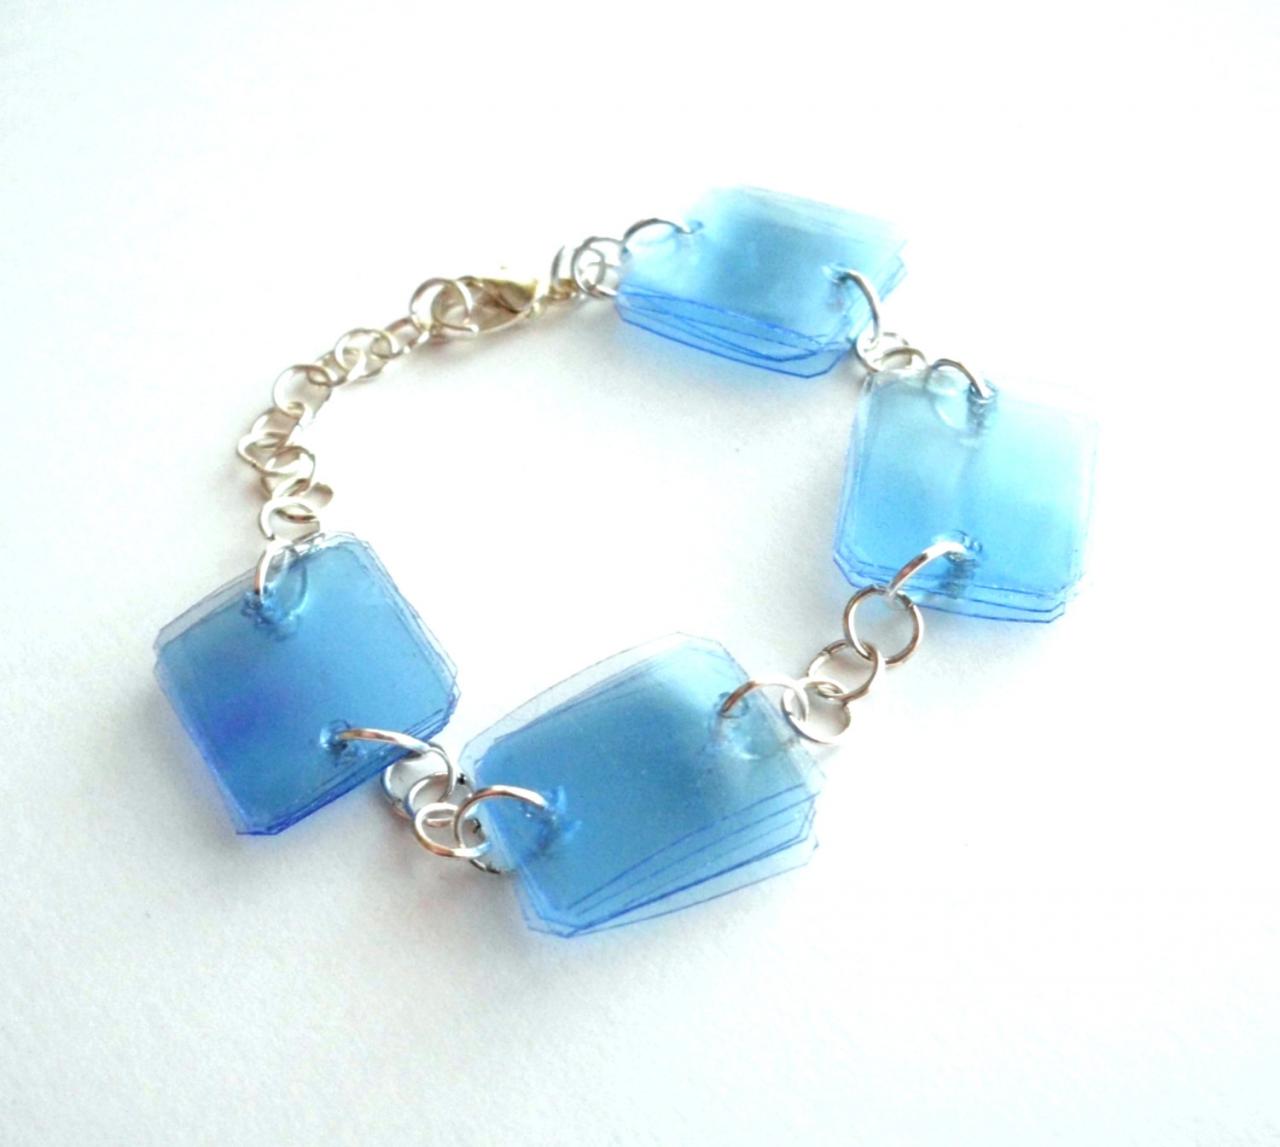 Blue Bracelet Handmade Of Recycled Plastic Bottles Upcycled Jewelry Modern Bracelet Geometric Minimalist